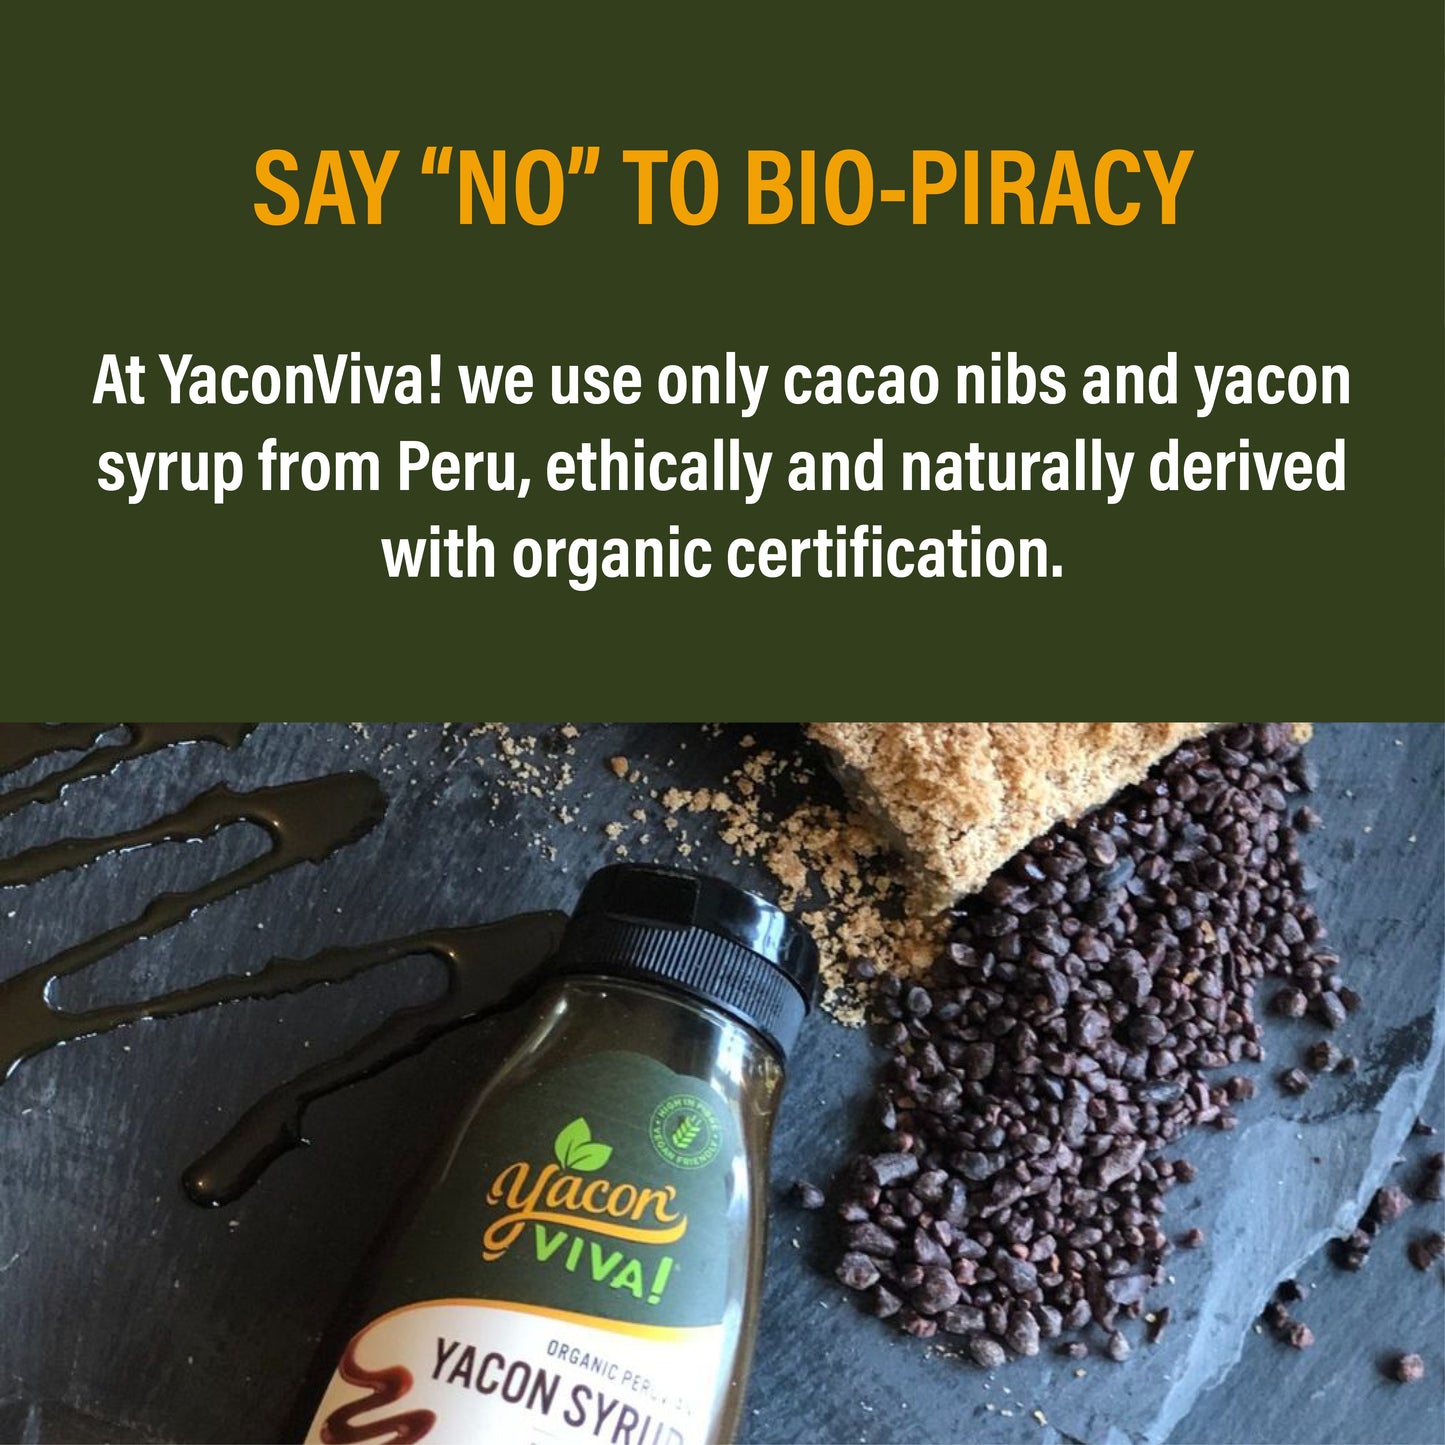 YaconViva! Organic Peruvian Yacon Syrup